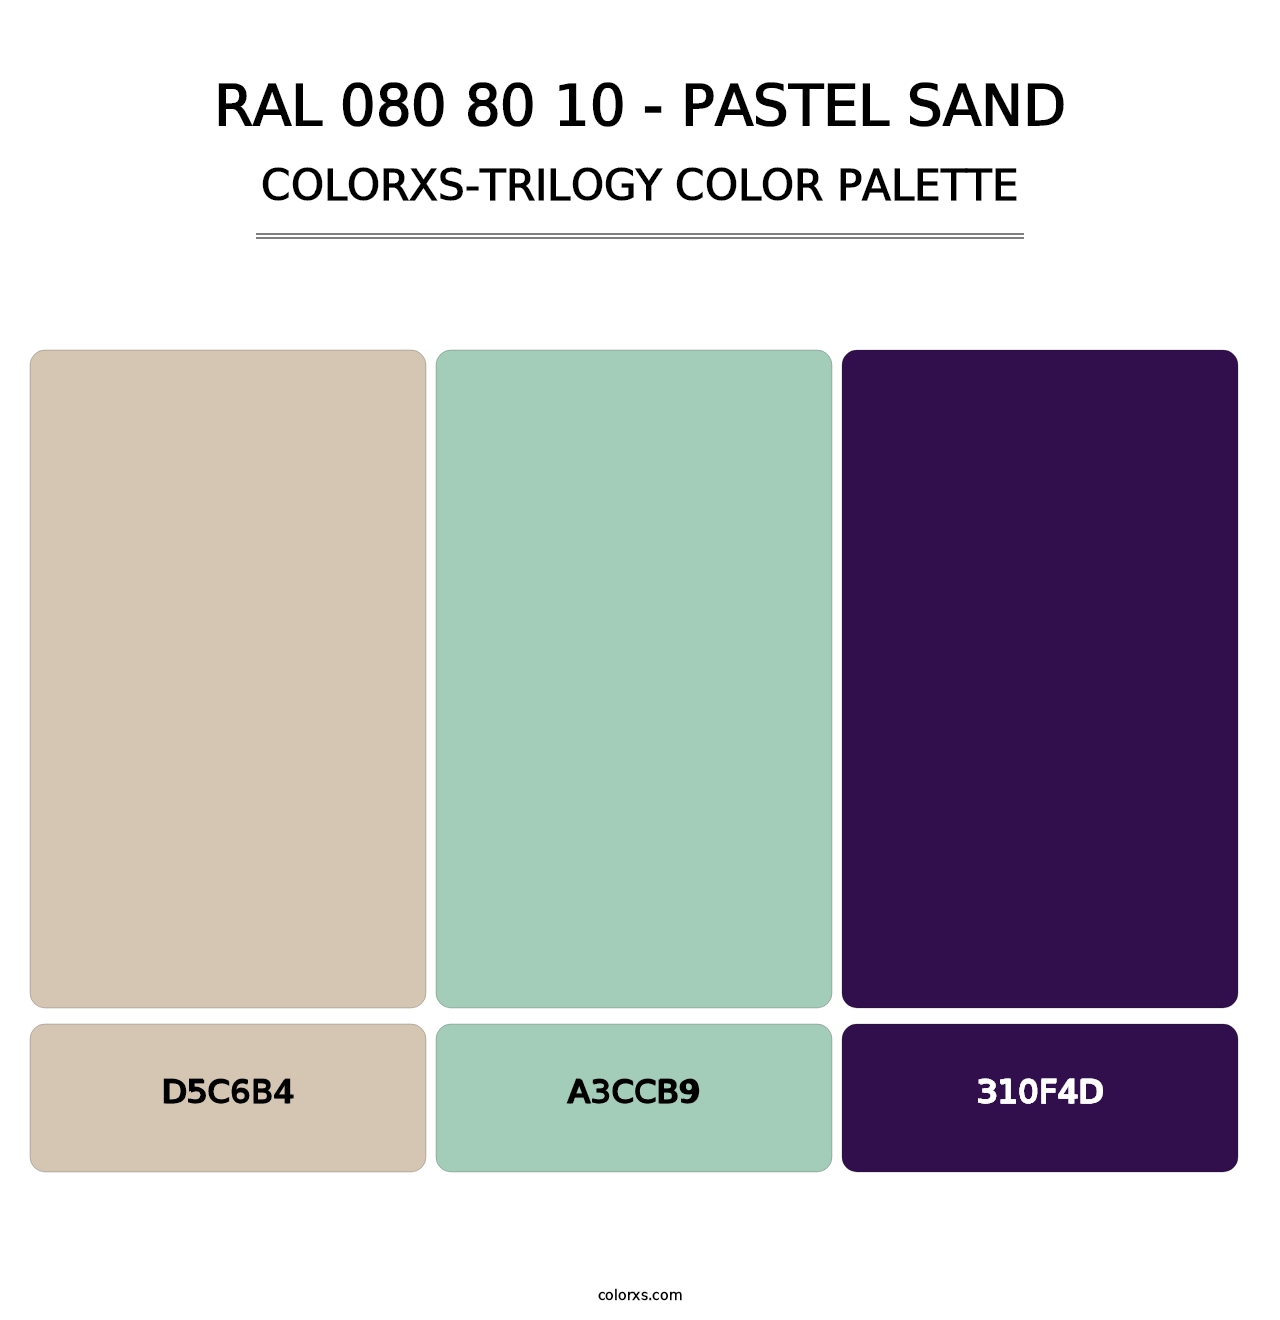 RAL 080 80 10 - Pastel Sand - Colorxs Trilogy Palette